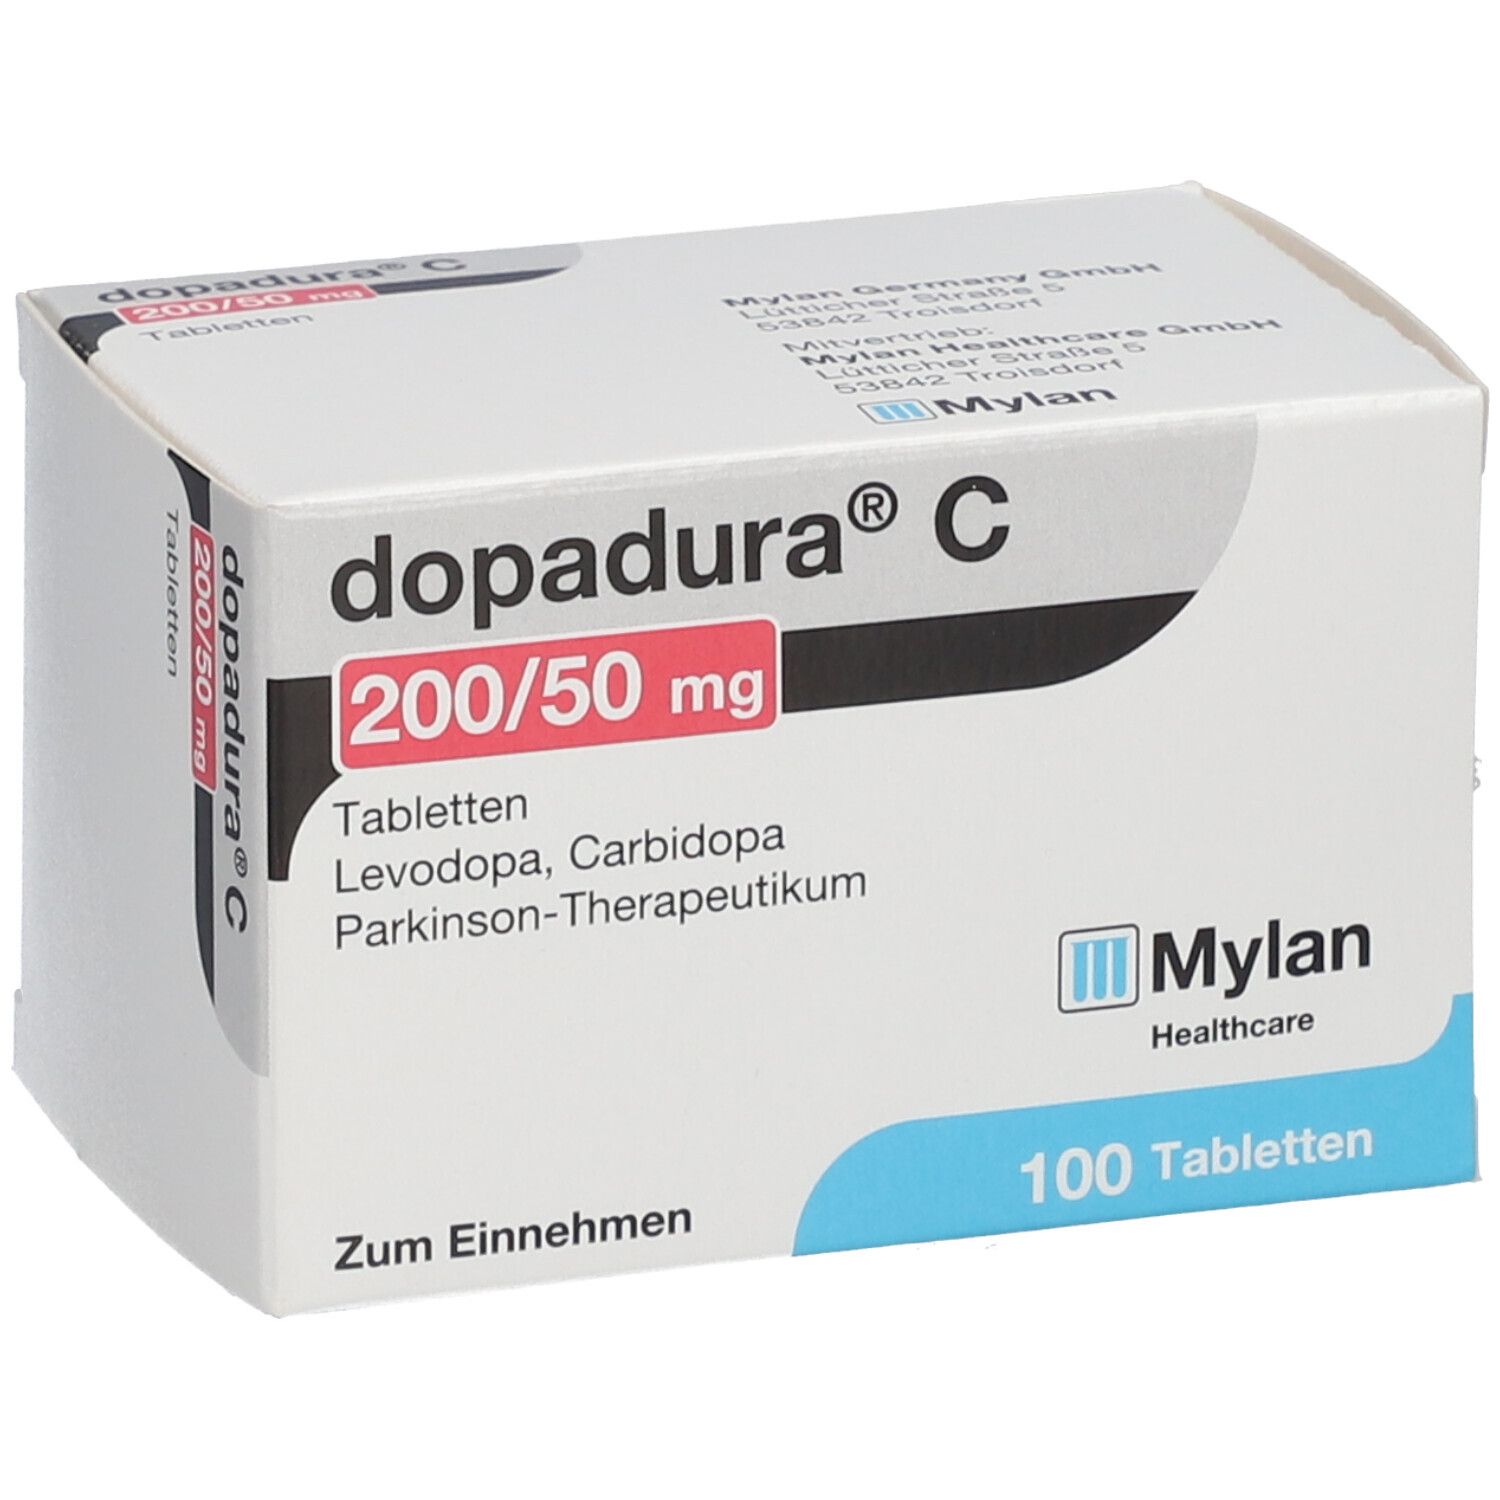 Dopadura® C 200/50 mg